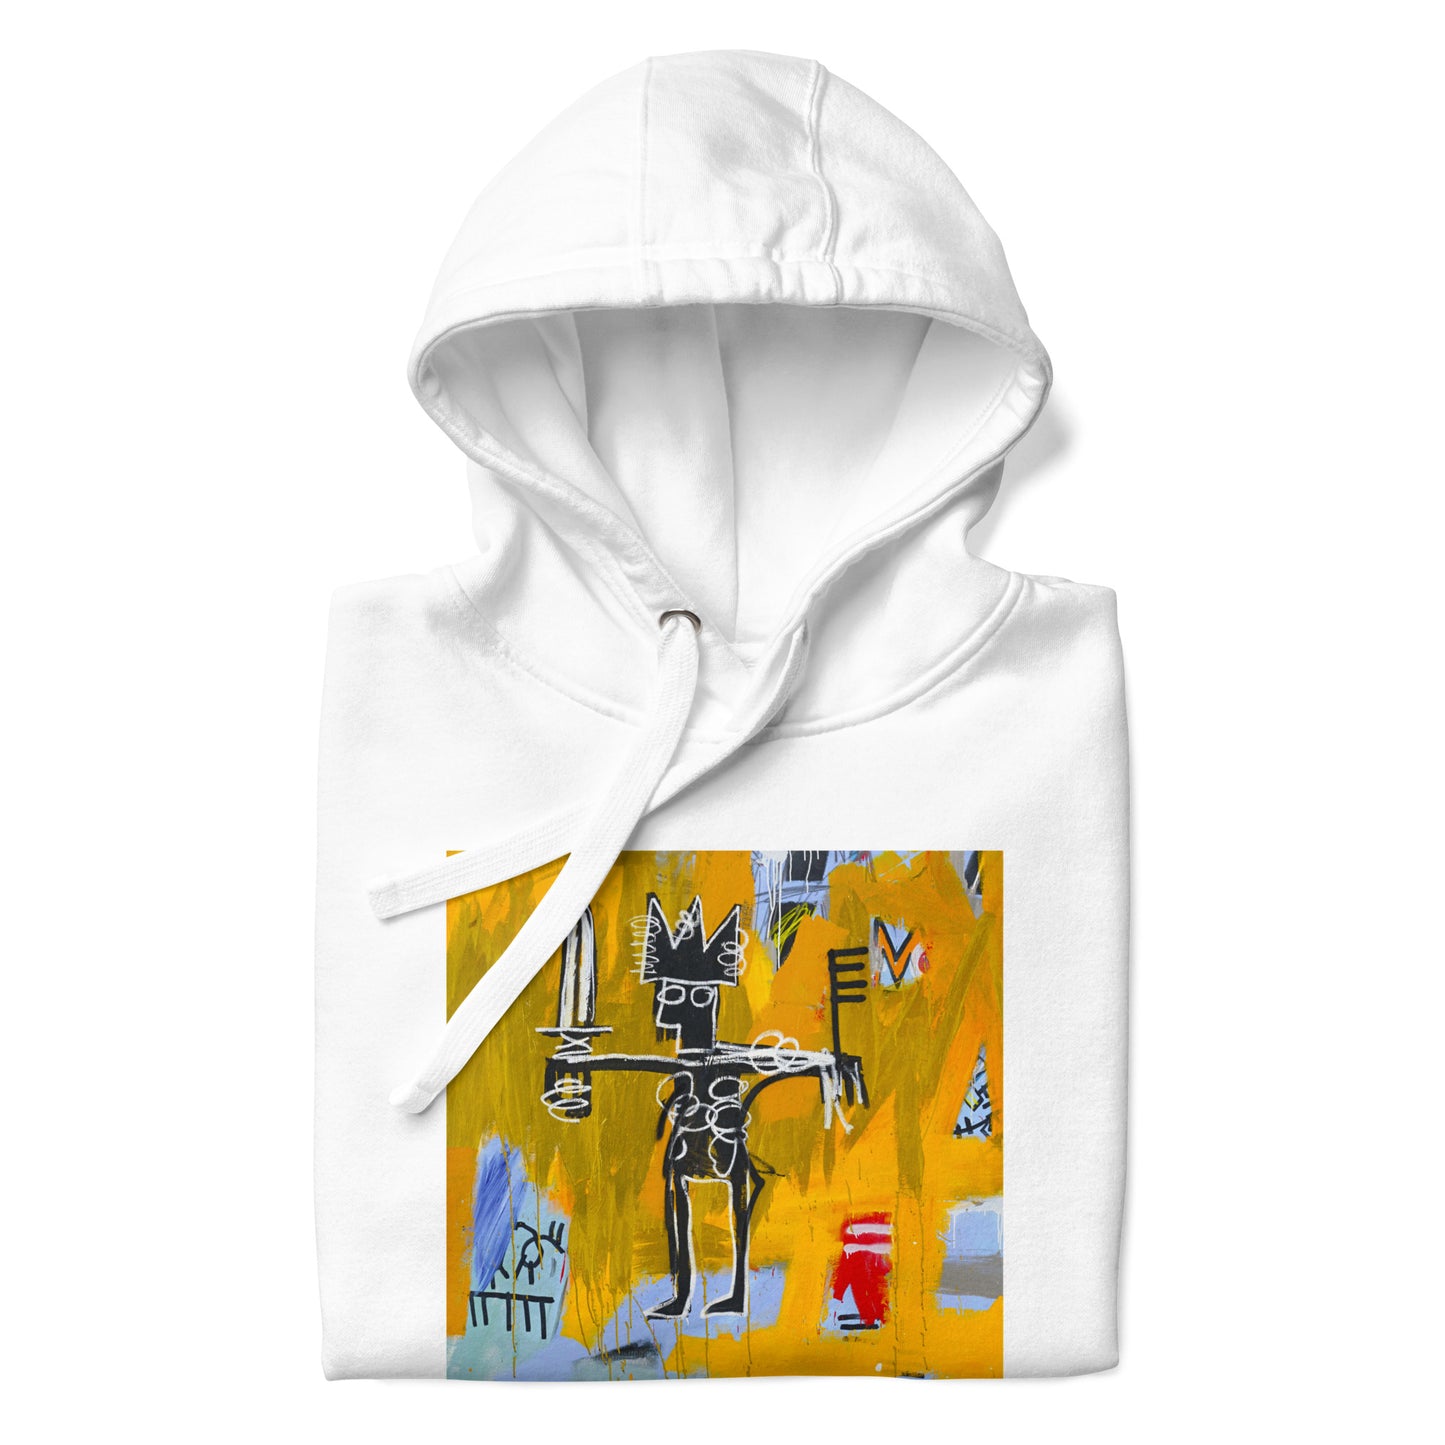 Jean-Michel Basquiat "Julius Caesar on Gold" Artwork Printed Premium Streetwear Sweatshirt Hoodie White